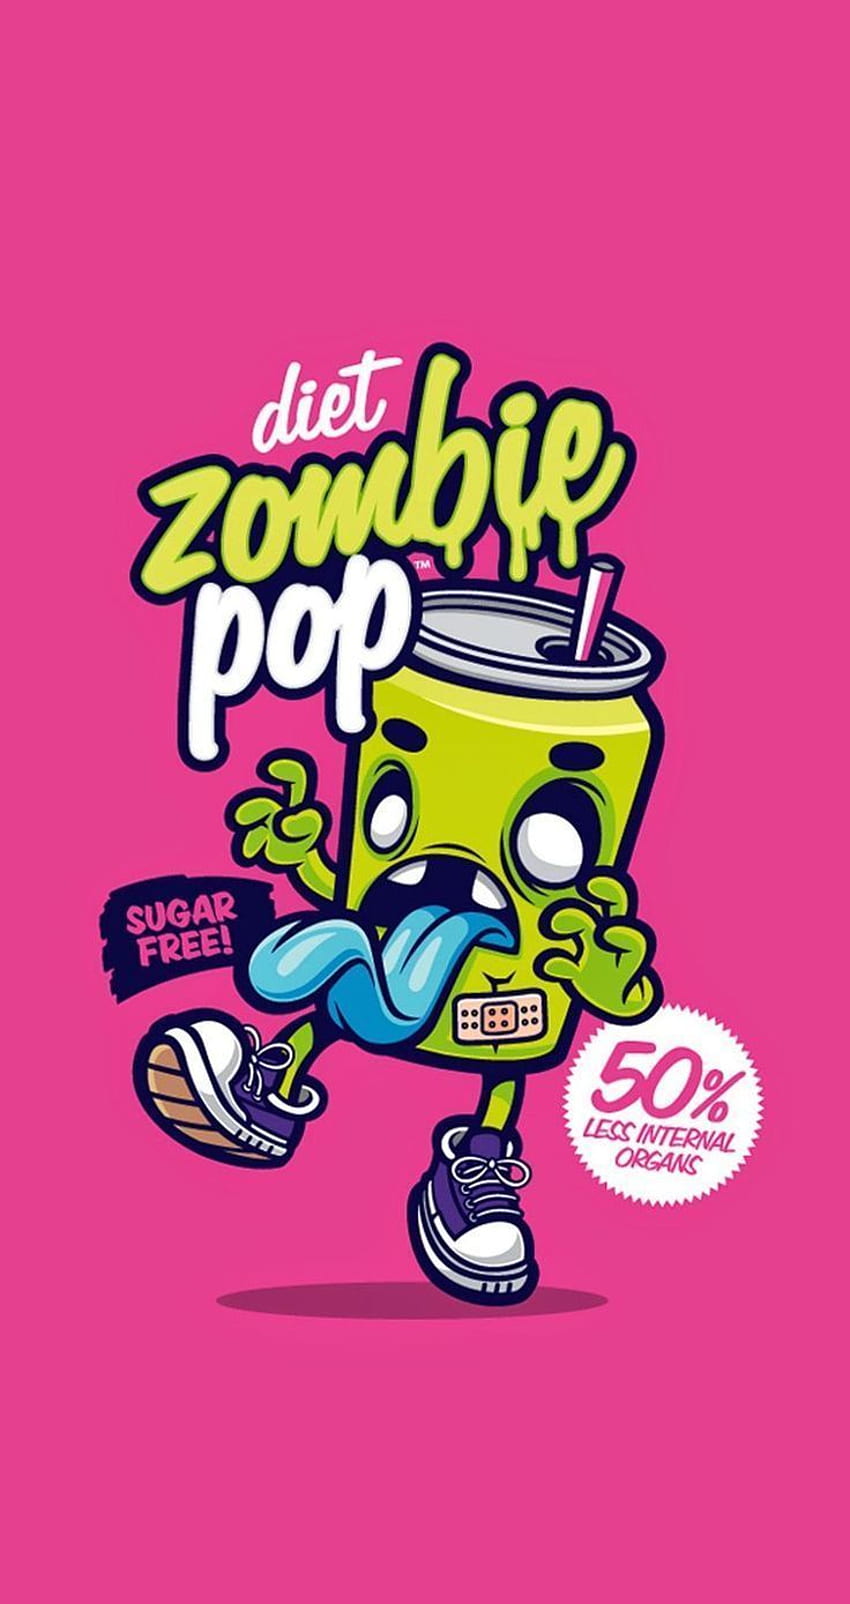 Cute & Funny Pop Art cartoon for iPhones! Diet zombie HD phone wallpaper